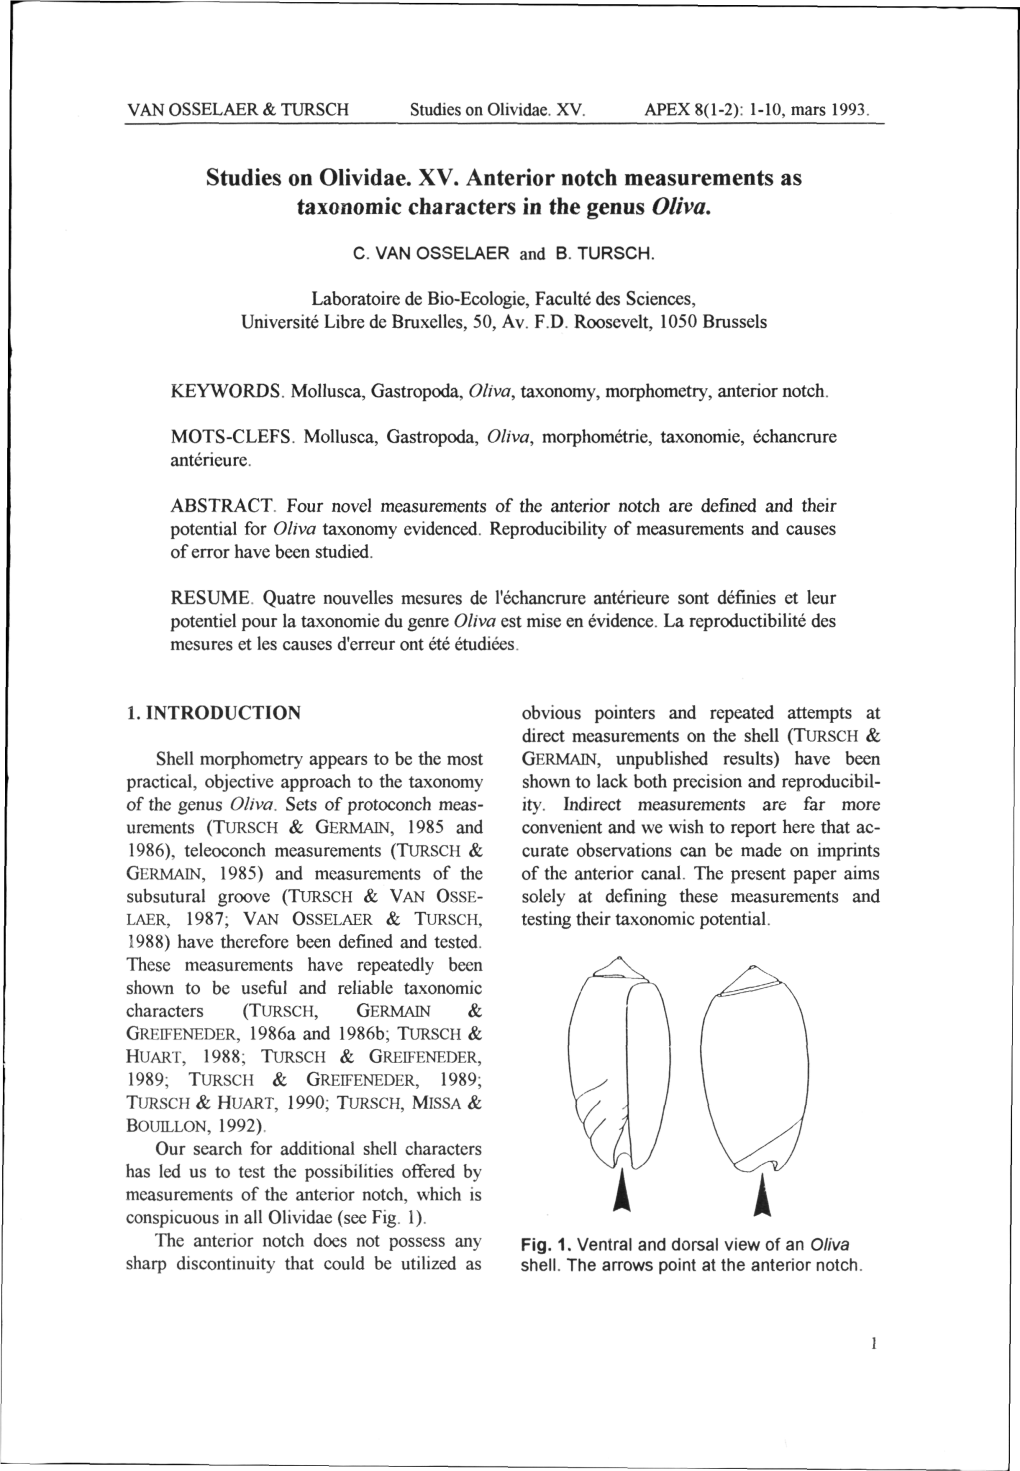 Studies on Olividae. XV. Anterior Notch Measurements As Taxonomie Characters in the Genus Oliva